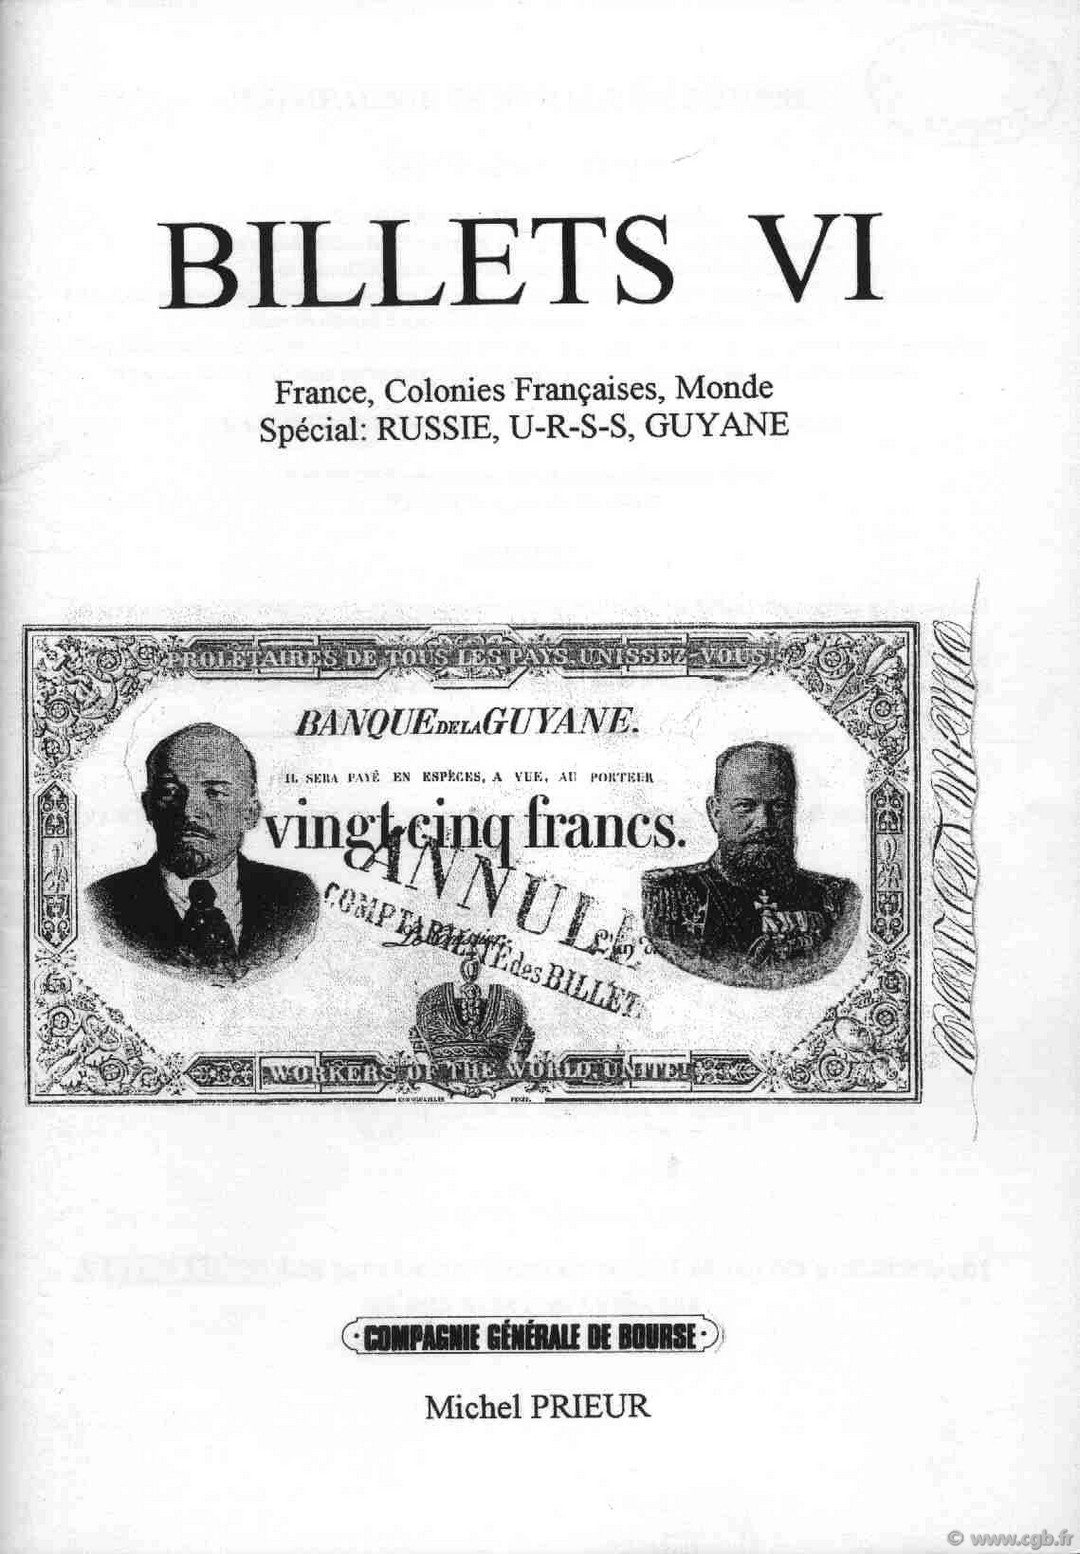 Billets 6 - France - Russie - URSS - Guyane PRIEUR Michel, DESSAL Jean-Marc